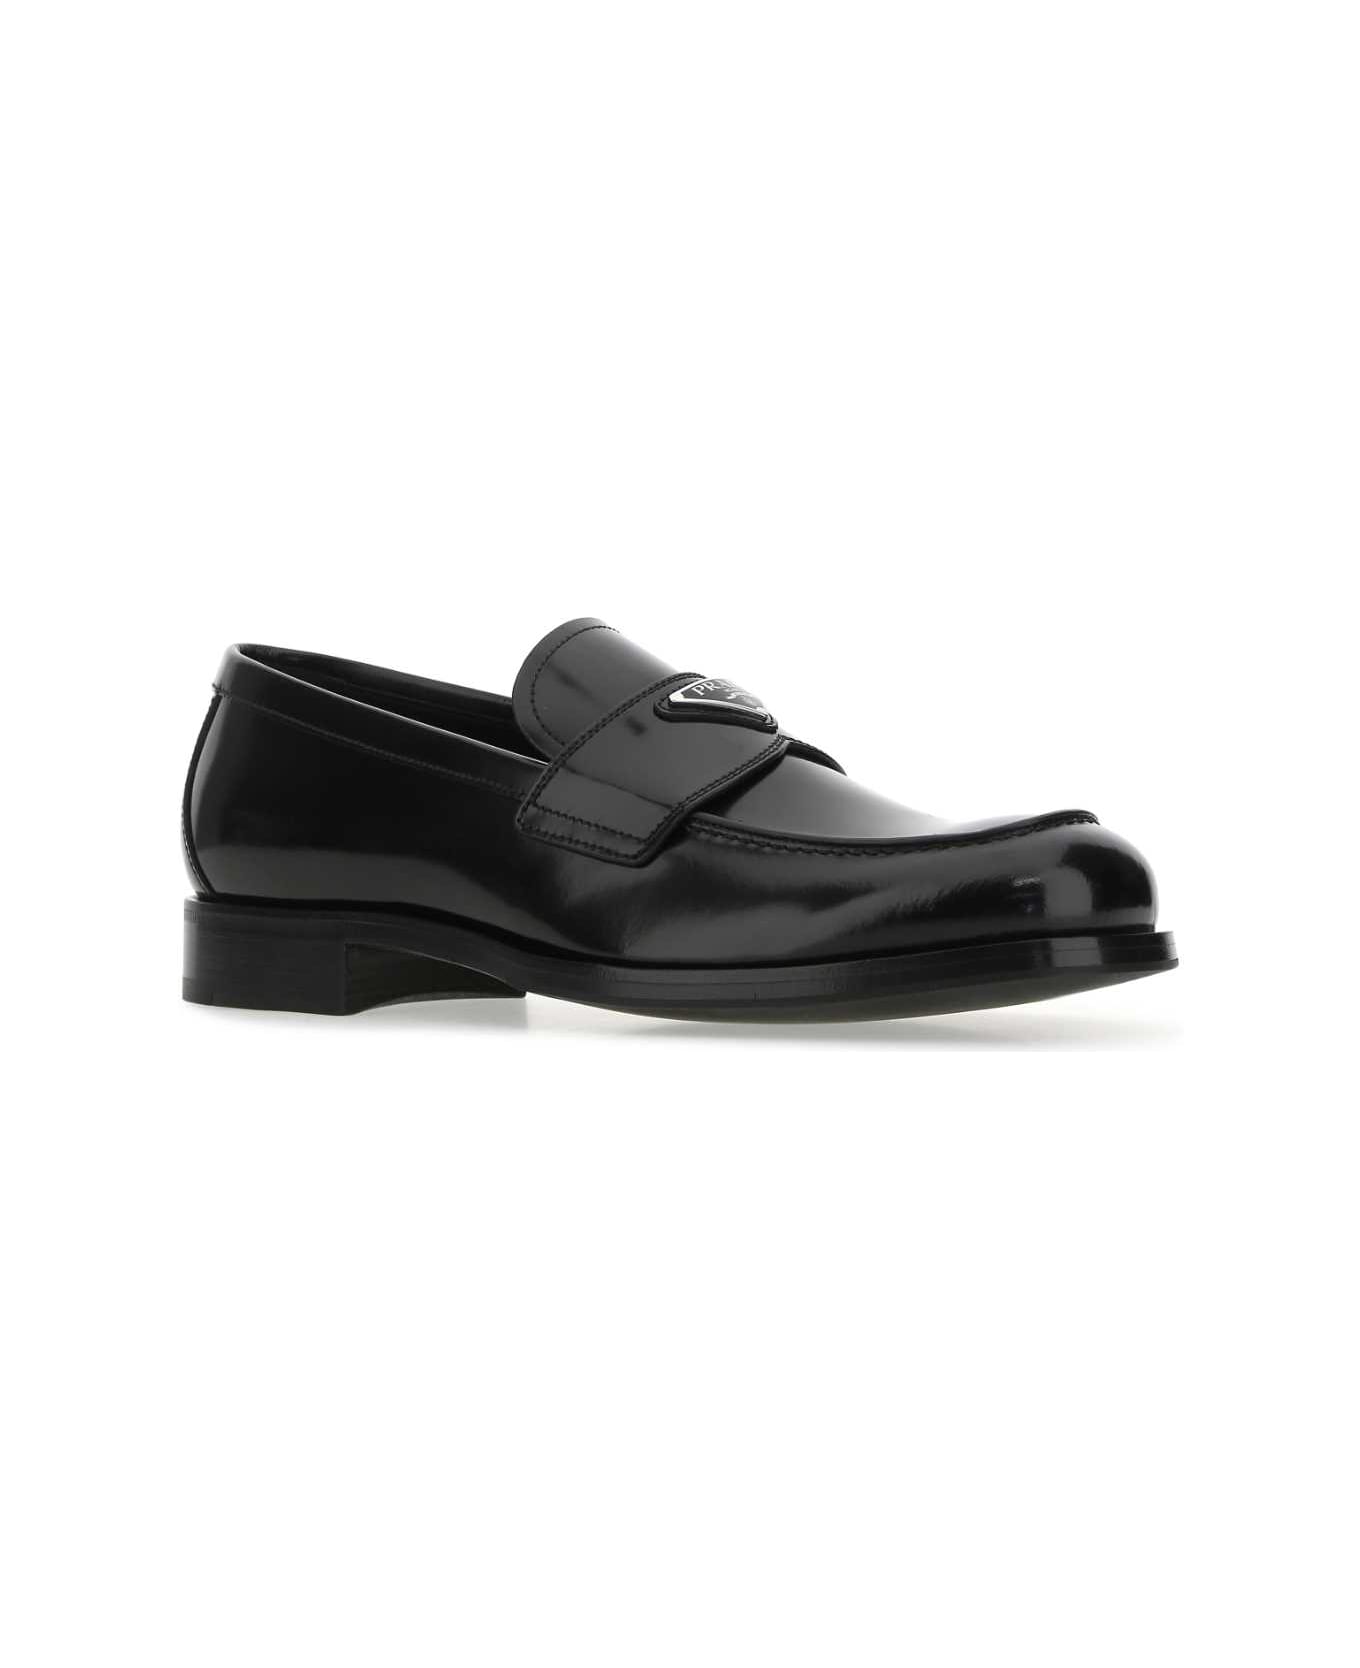 Prada Black Leather Loafers - F0002